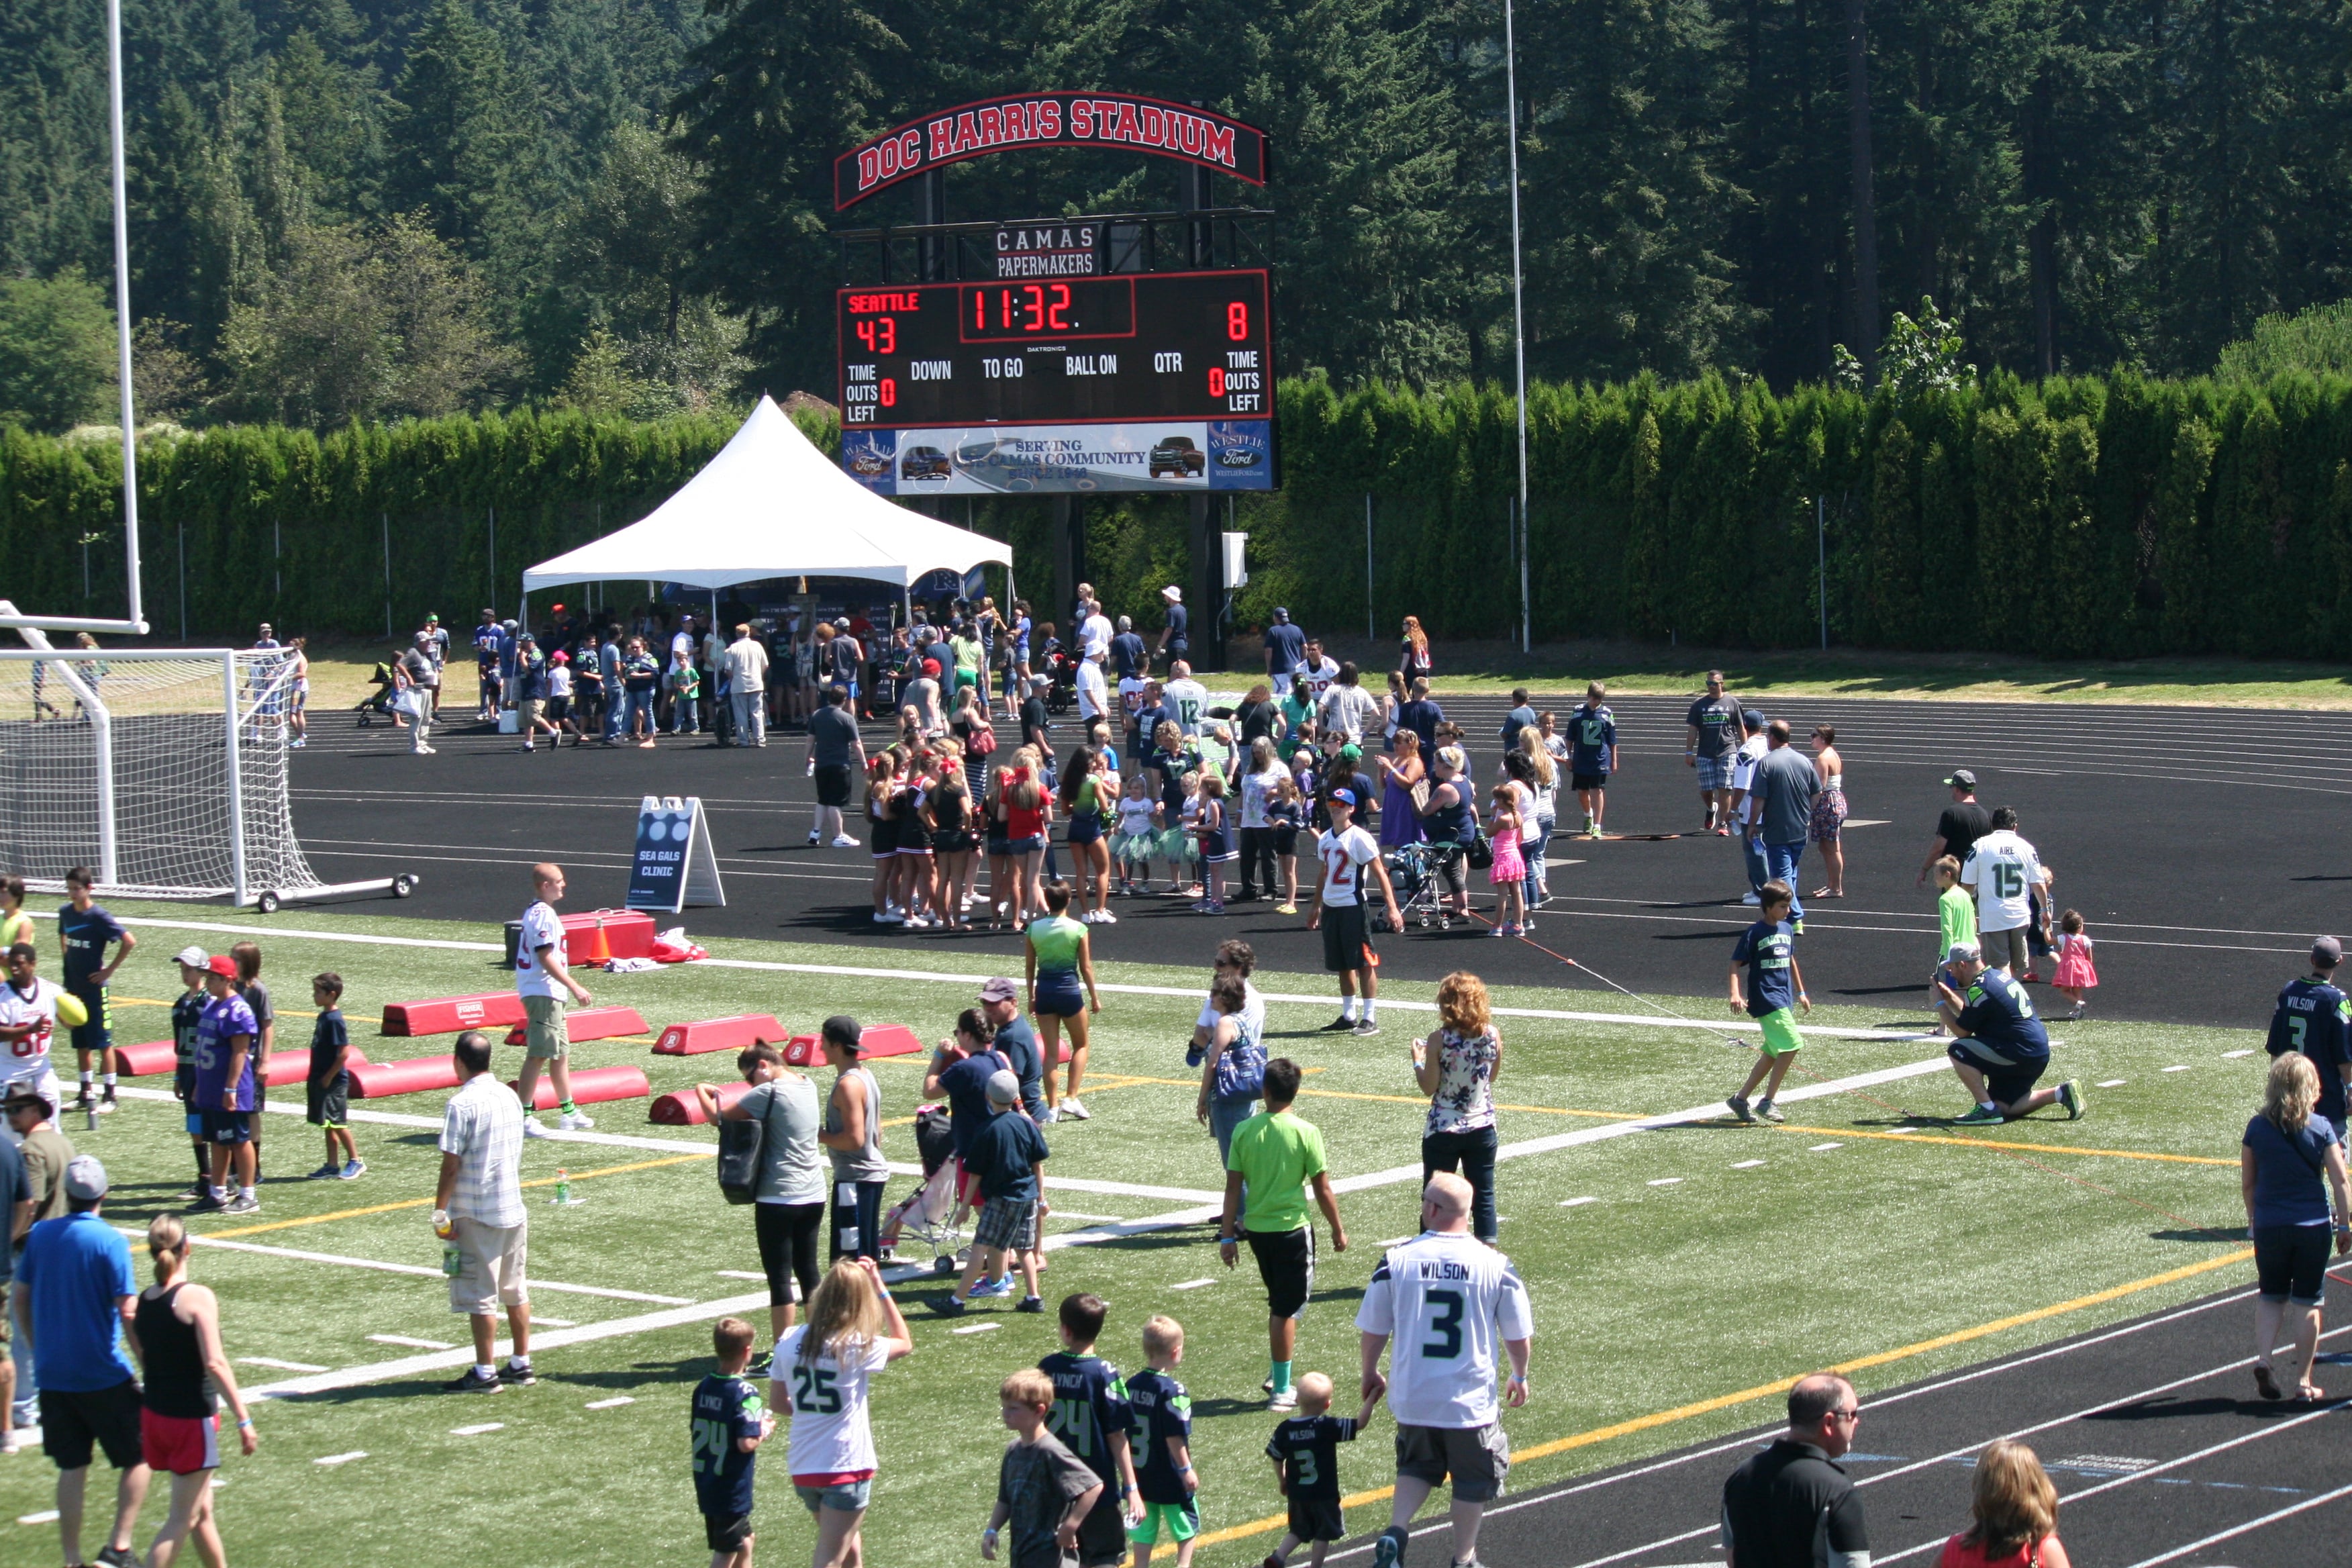 Seattle Seahawks Play 60 Family Fest at Doc Harris Stadium, in Camas.